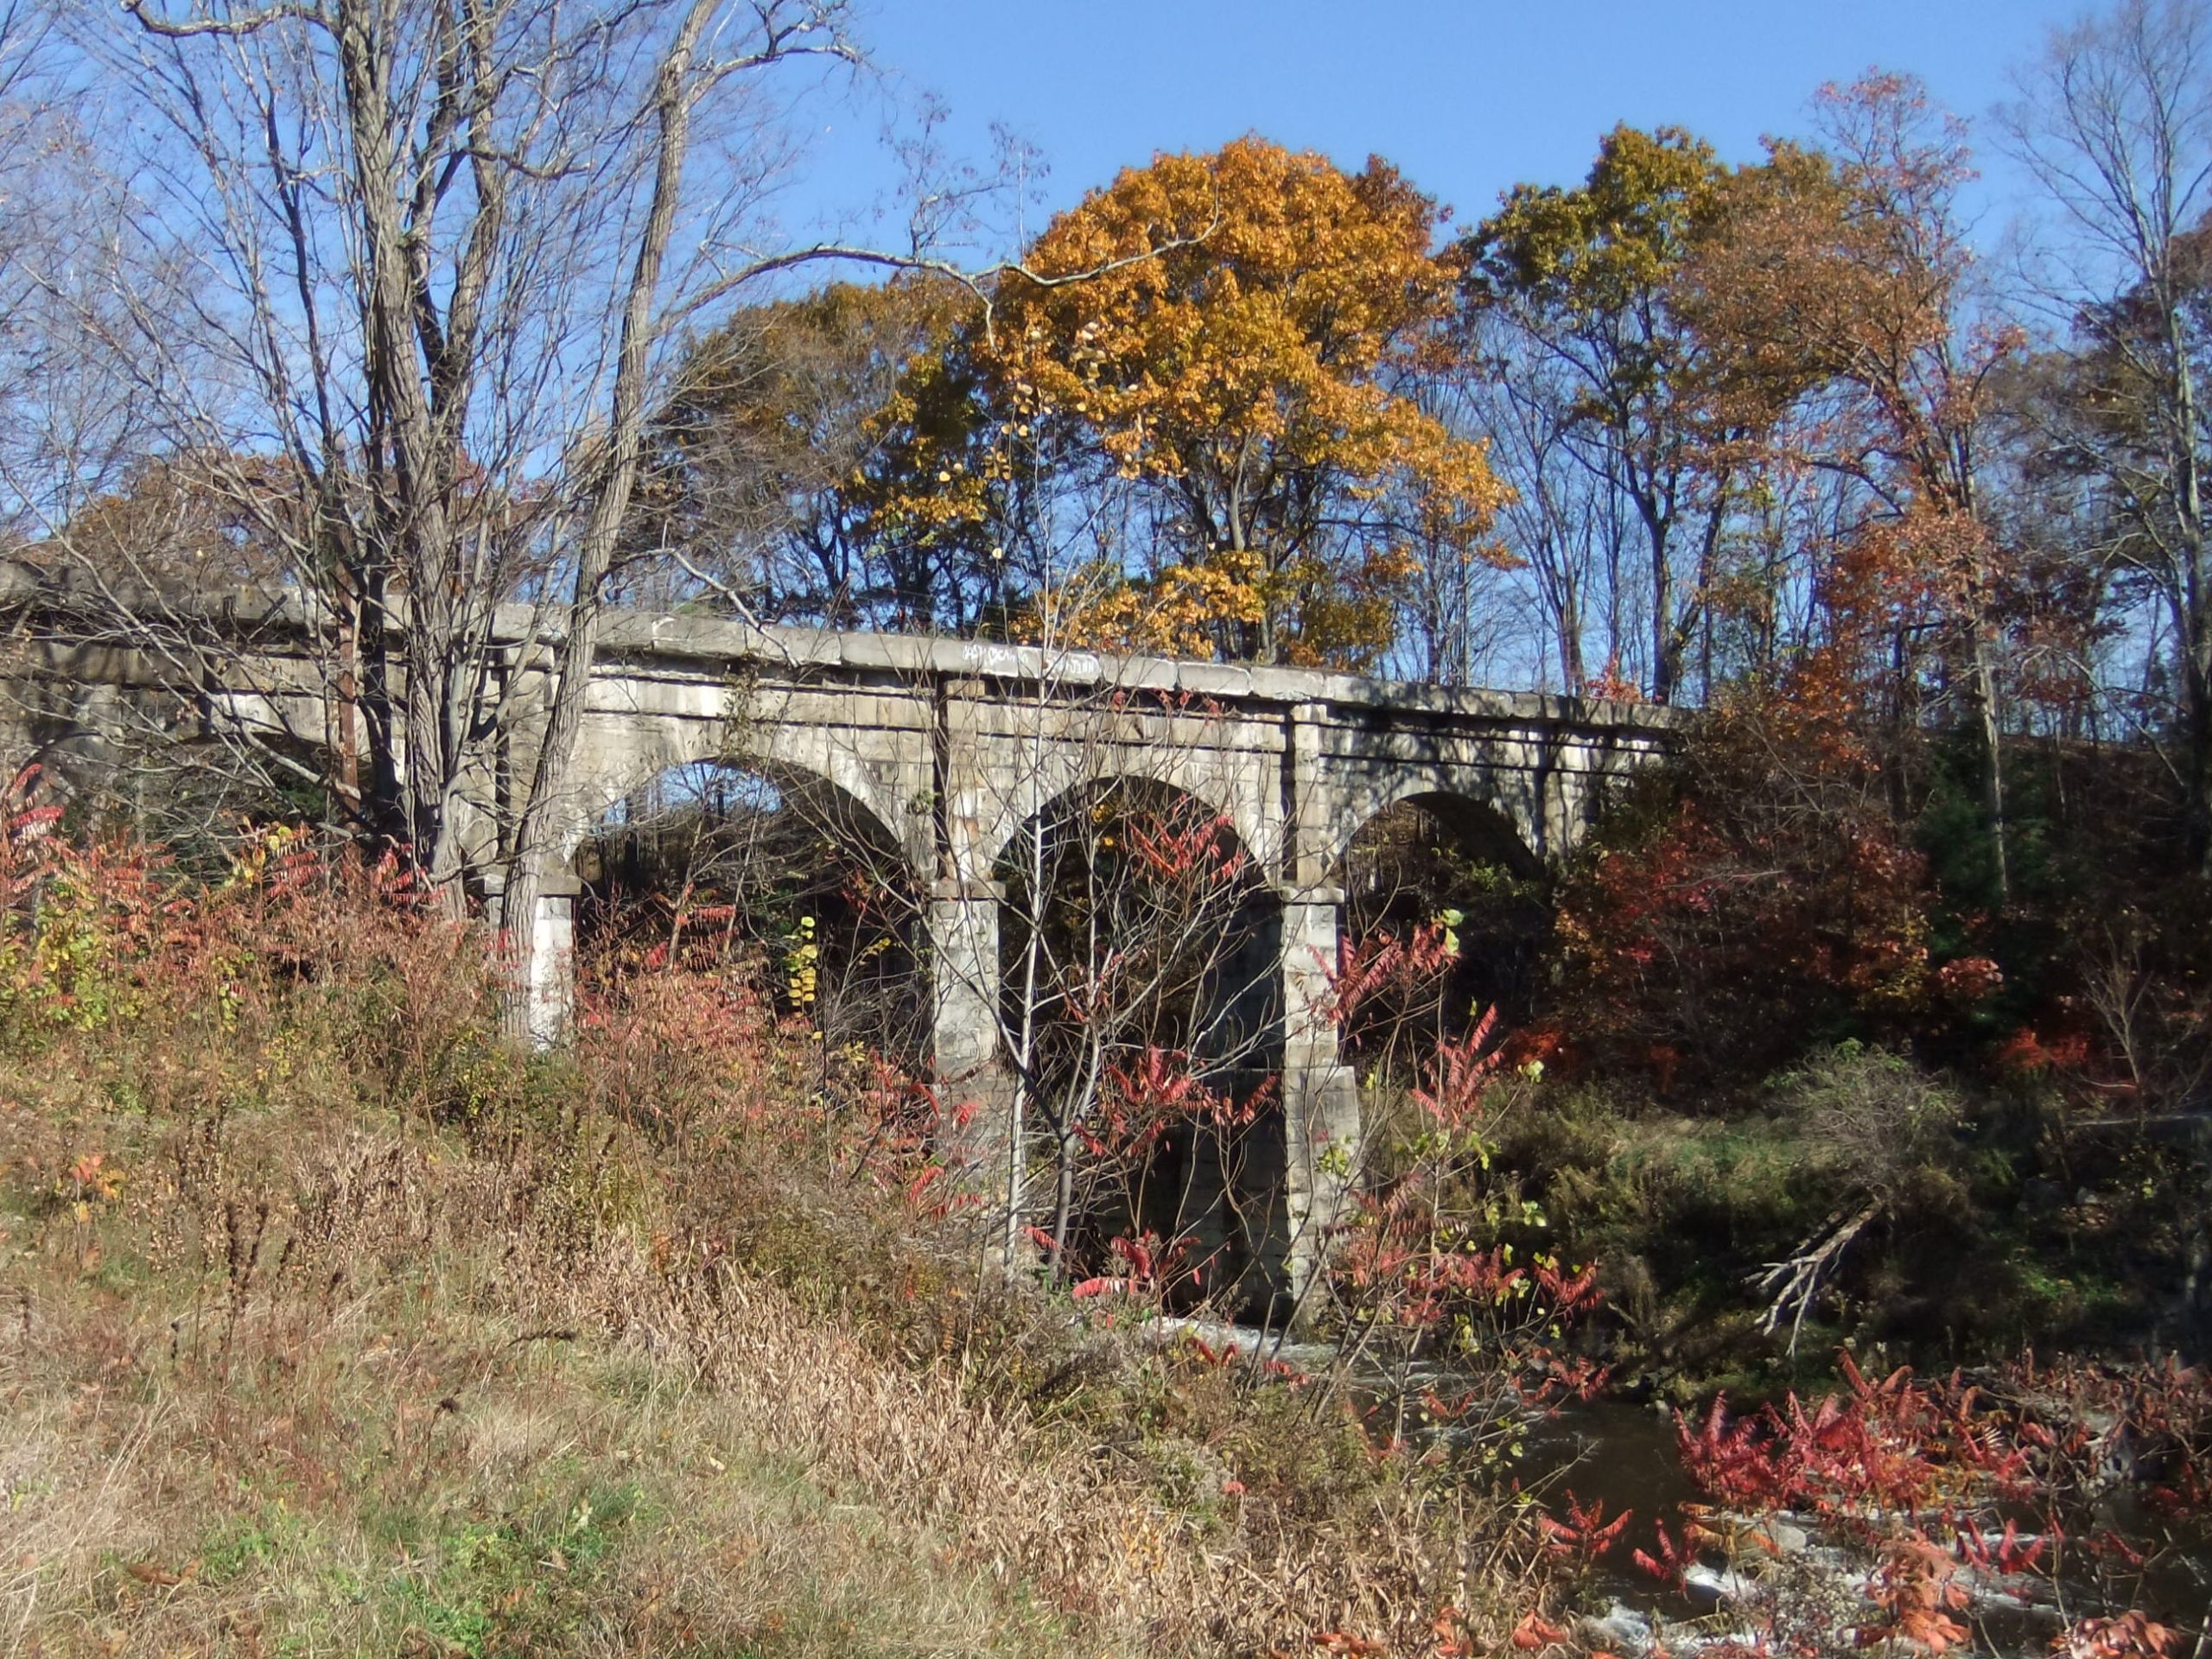 Bernardston Railroad Bridge (user submitted)